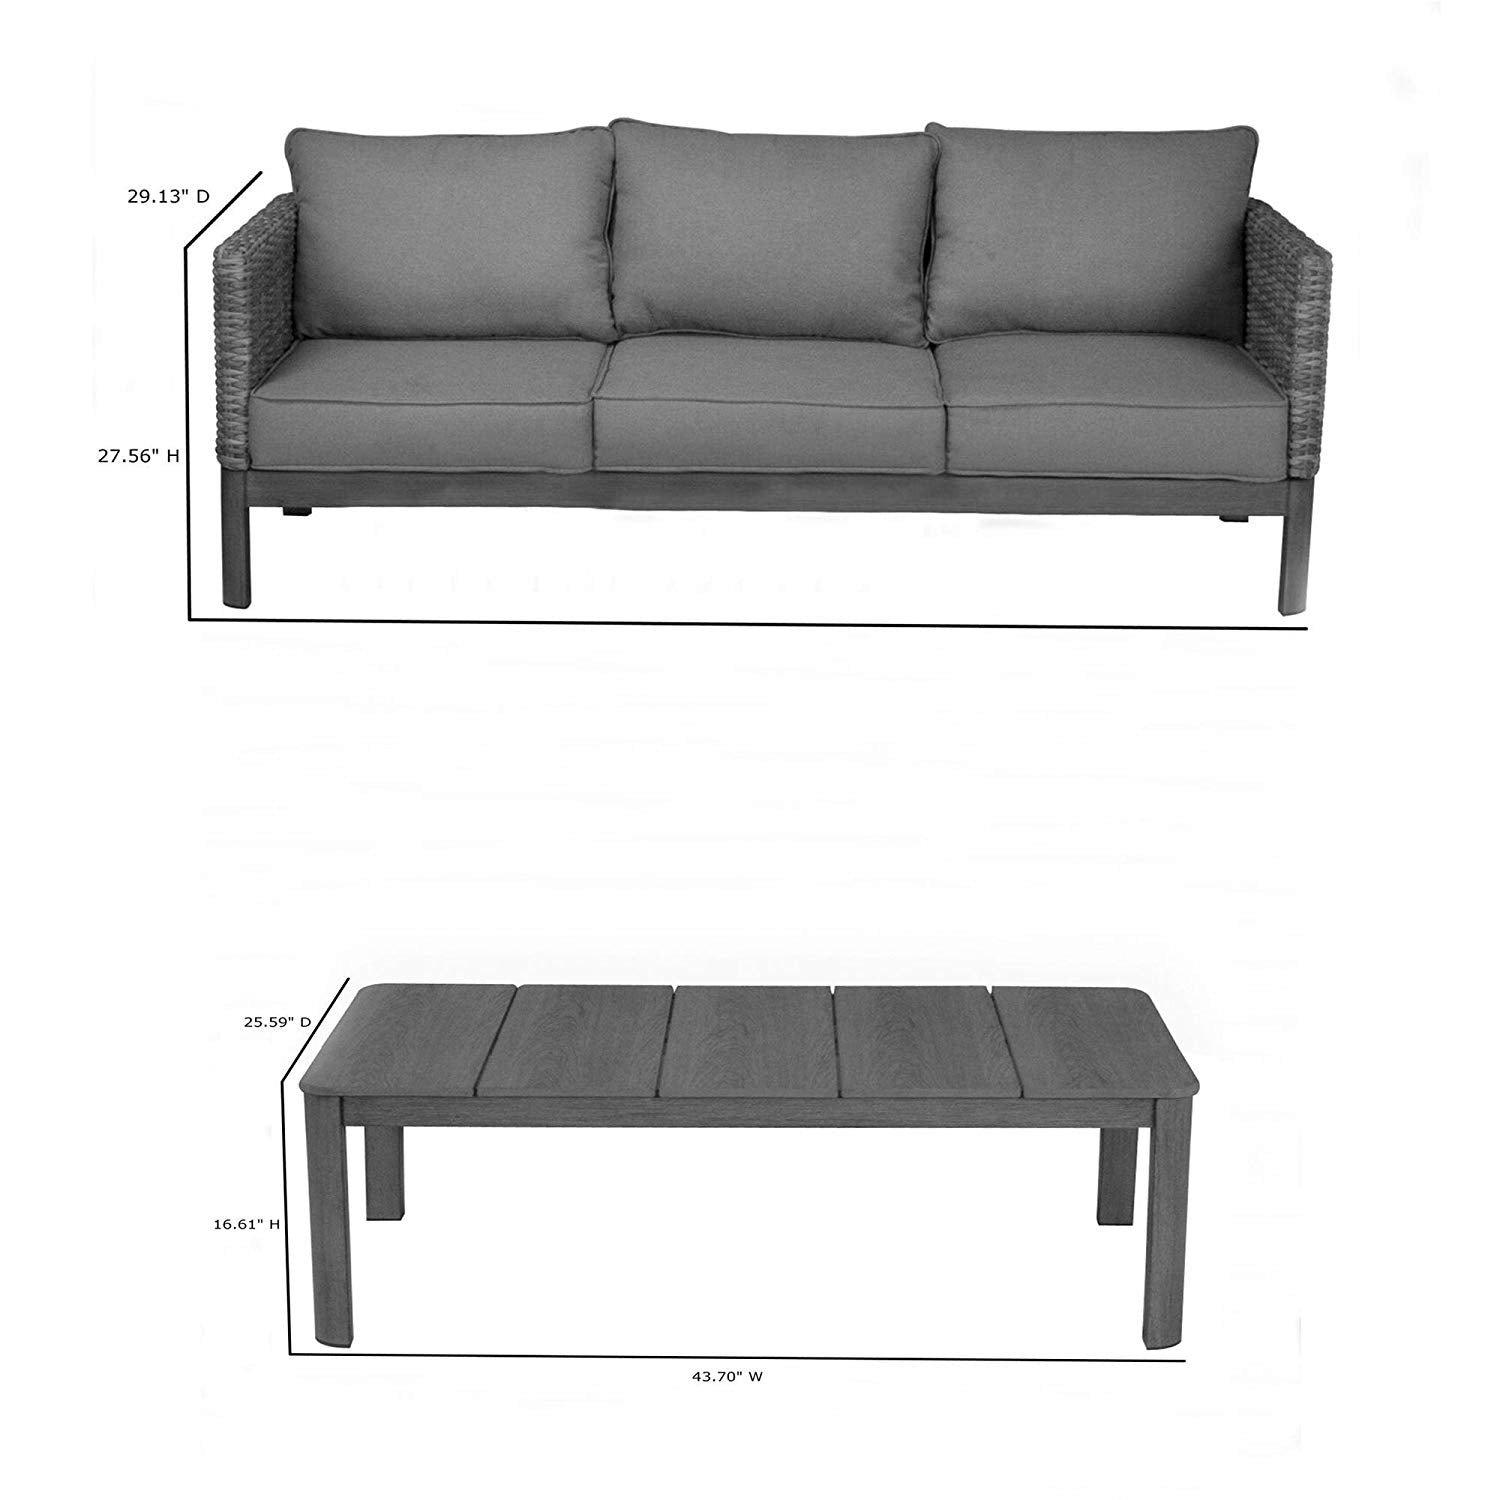 COSCO Outdoor Furniture Set, Coffee Table, Sofa, Chair Set, 4 Piece, Tan Wicker, Warm Gray Cushions